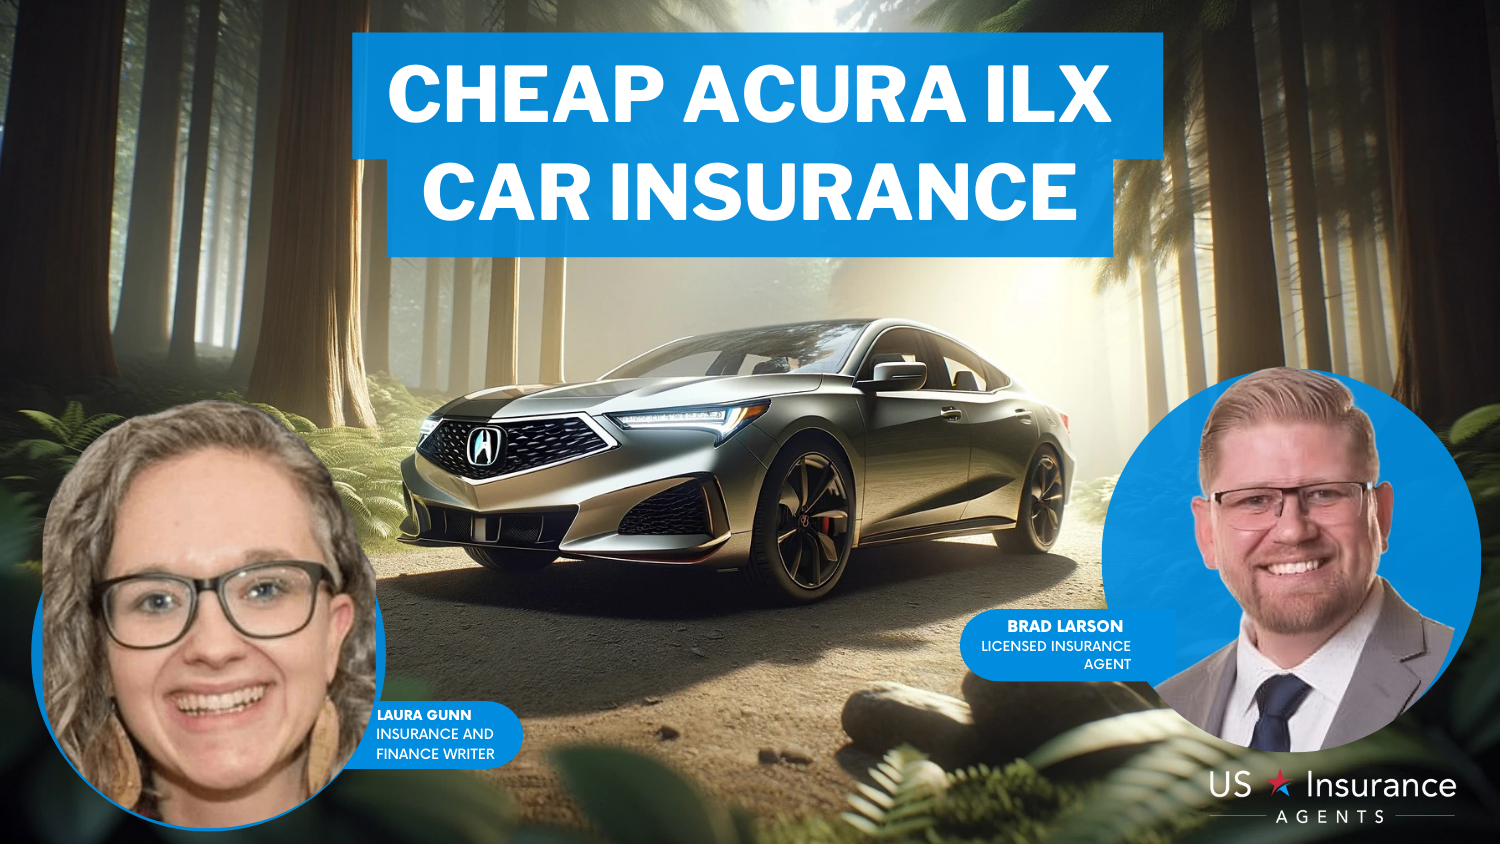 Cheap Acura ILX Car Insurance: Erie, AA, and USAA